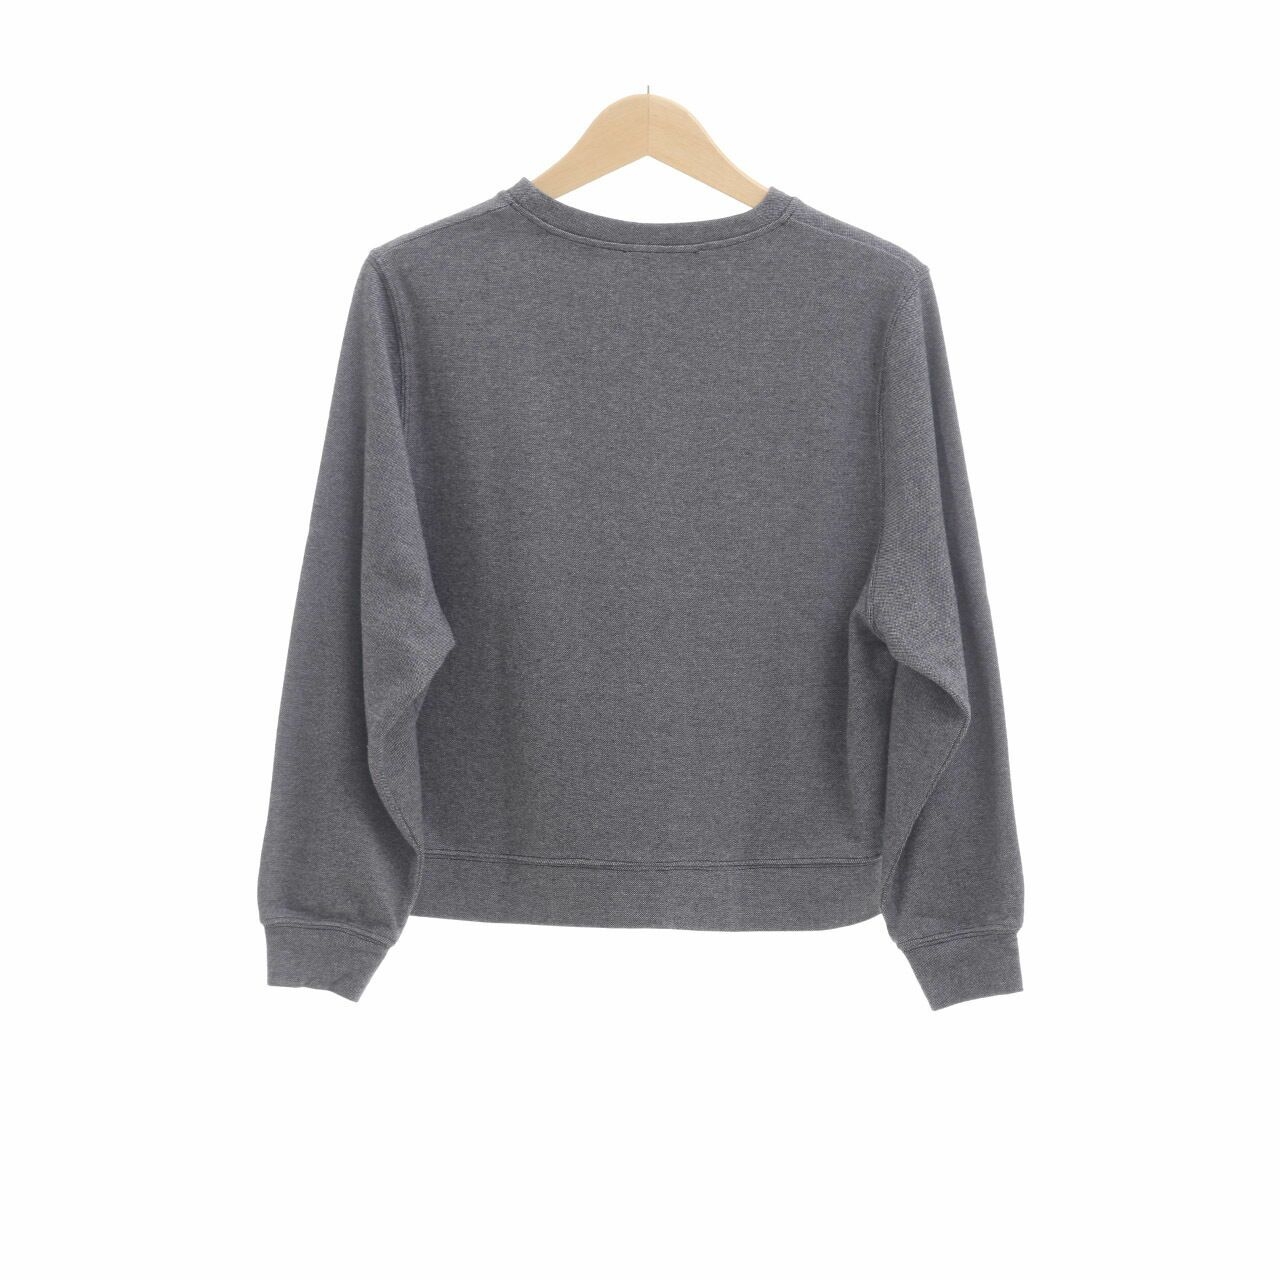 Mango Grey Sweater